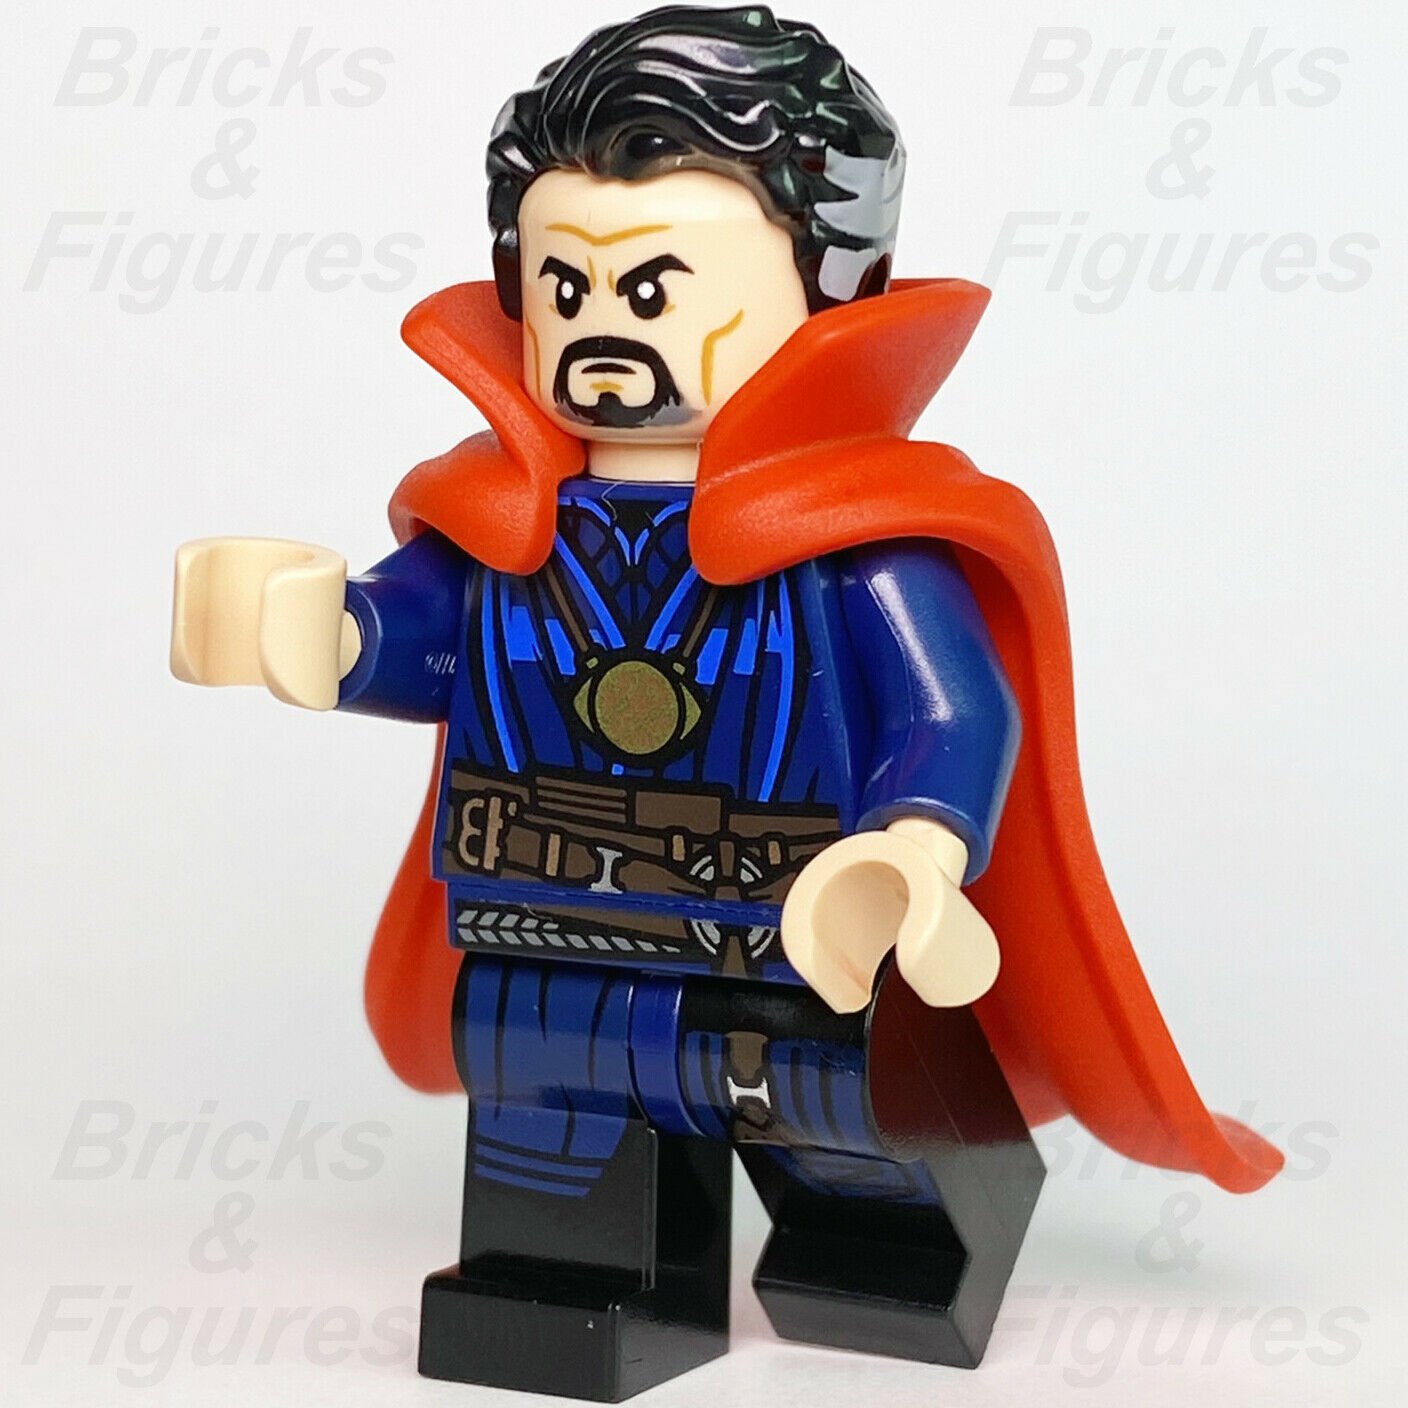 Marvel Super Heroes LEGO Doctor Strange Spider-Man No Way Home Minifigure 76185 - Bricks & Figures